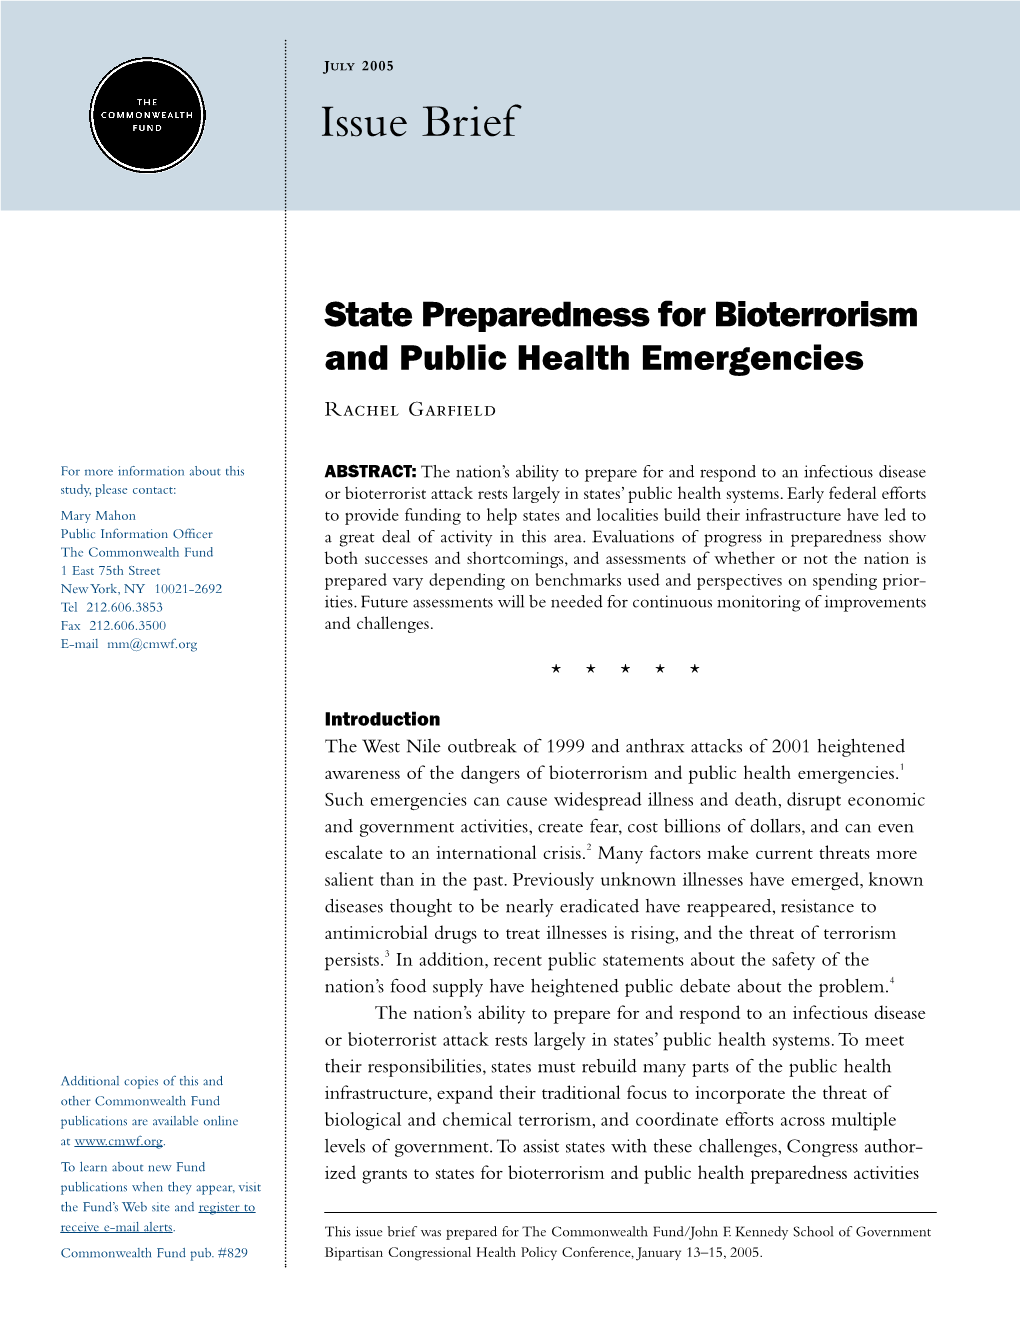 State Preparedness for Bioterrorism and Public Health Emergencies Rachel Garfield